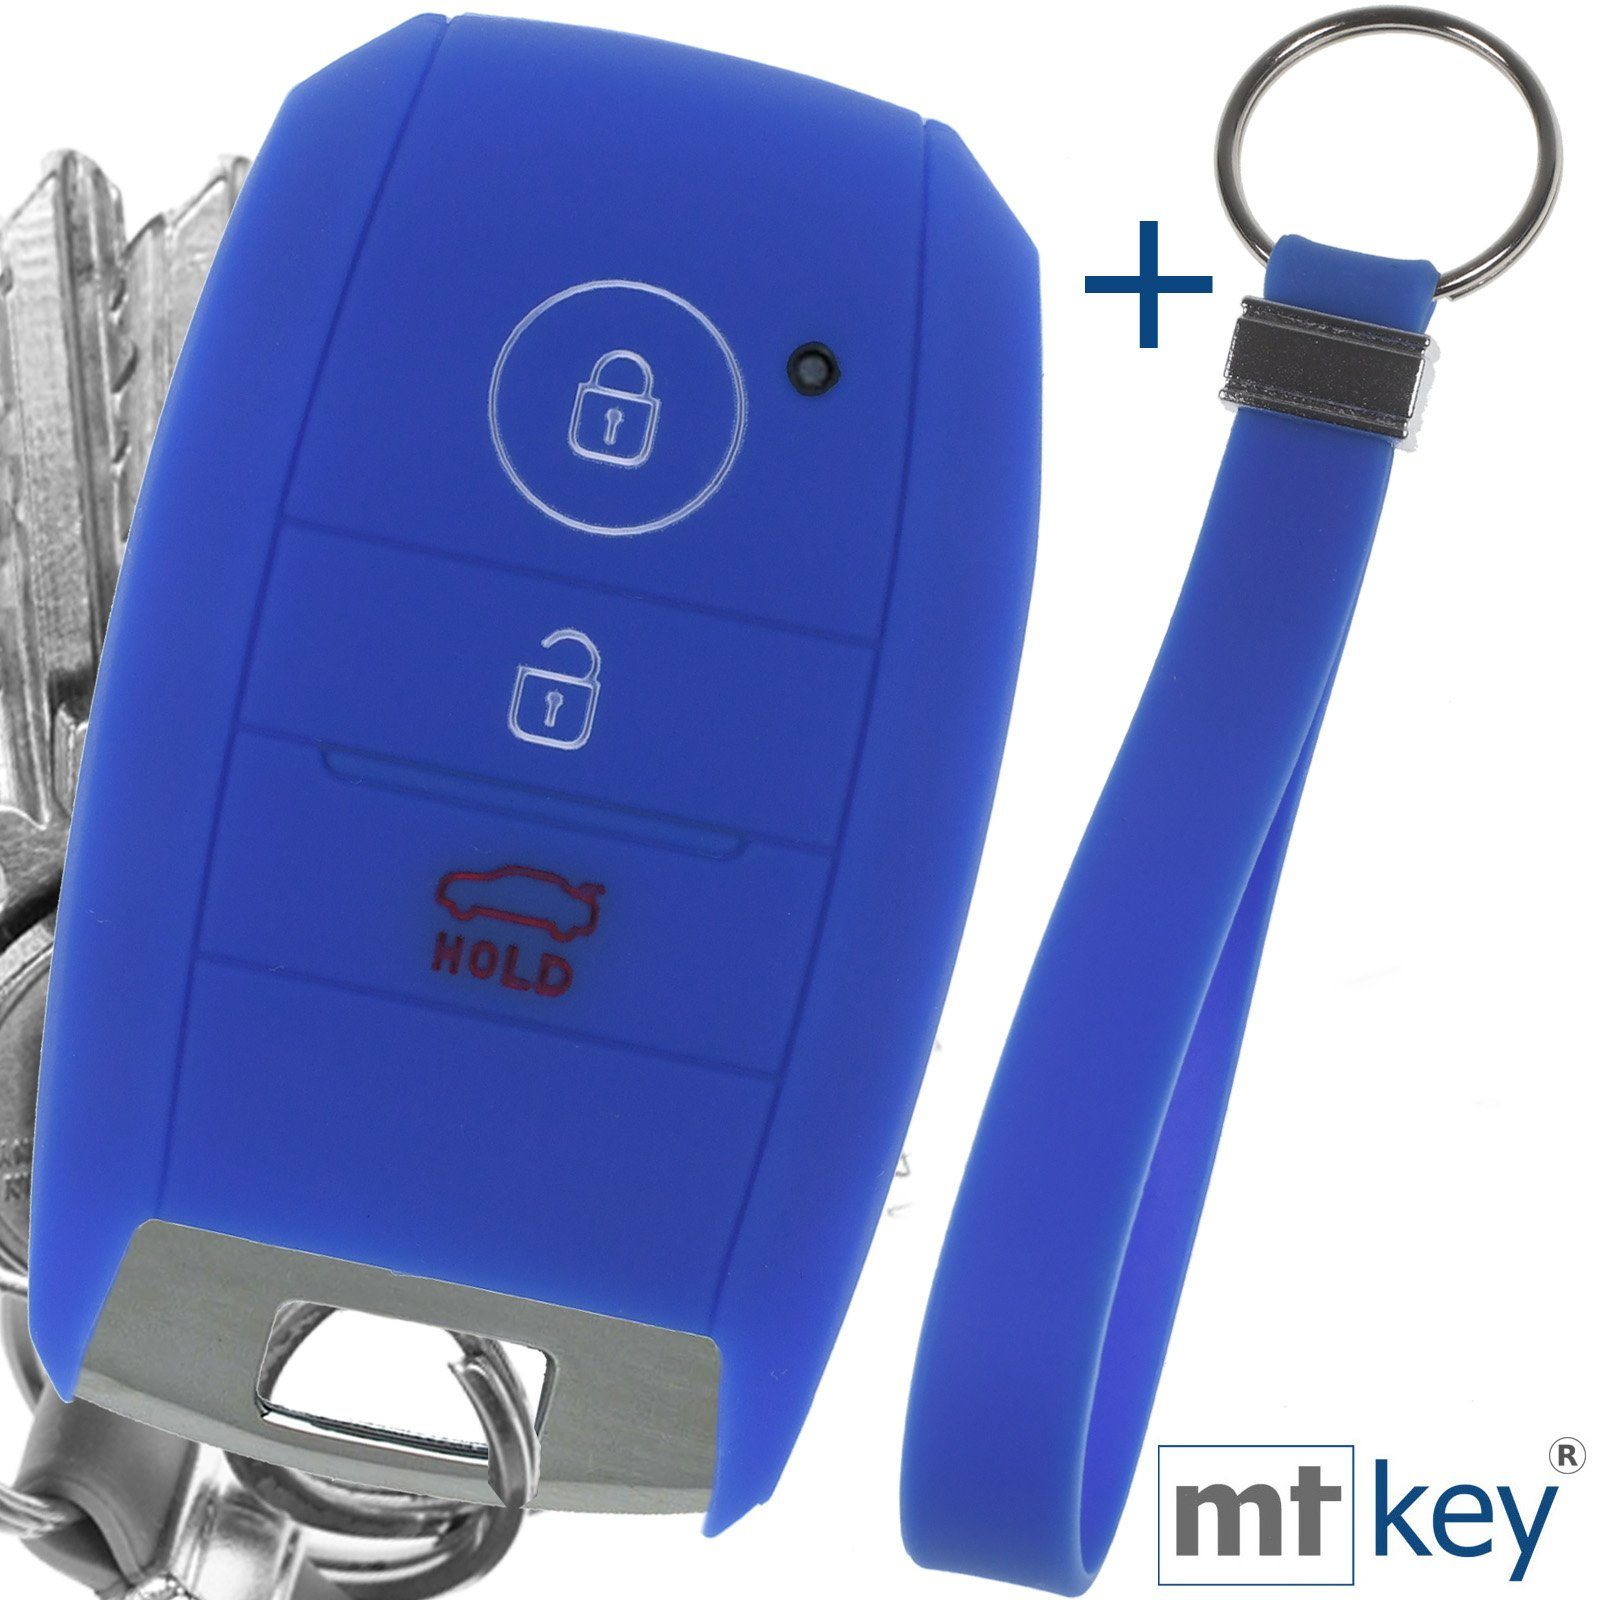 mt-key Schlüsseltasche Autoschlüssel Silikon Schutzhülle im Wabe Design  Blau + Schlüsselband, für Hyundai i10 i20 ix25 ix35 i40 Accent Tucson 3  Knopf Klappschlüssel